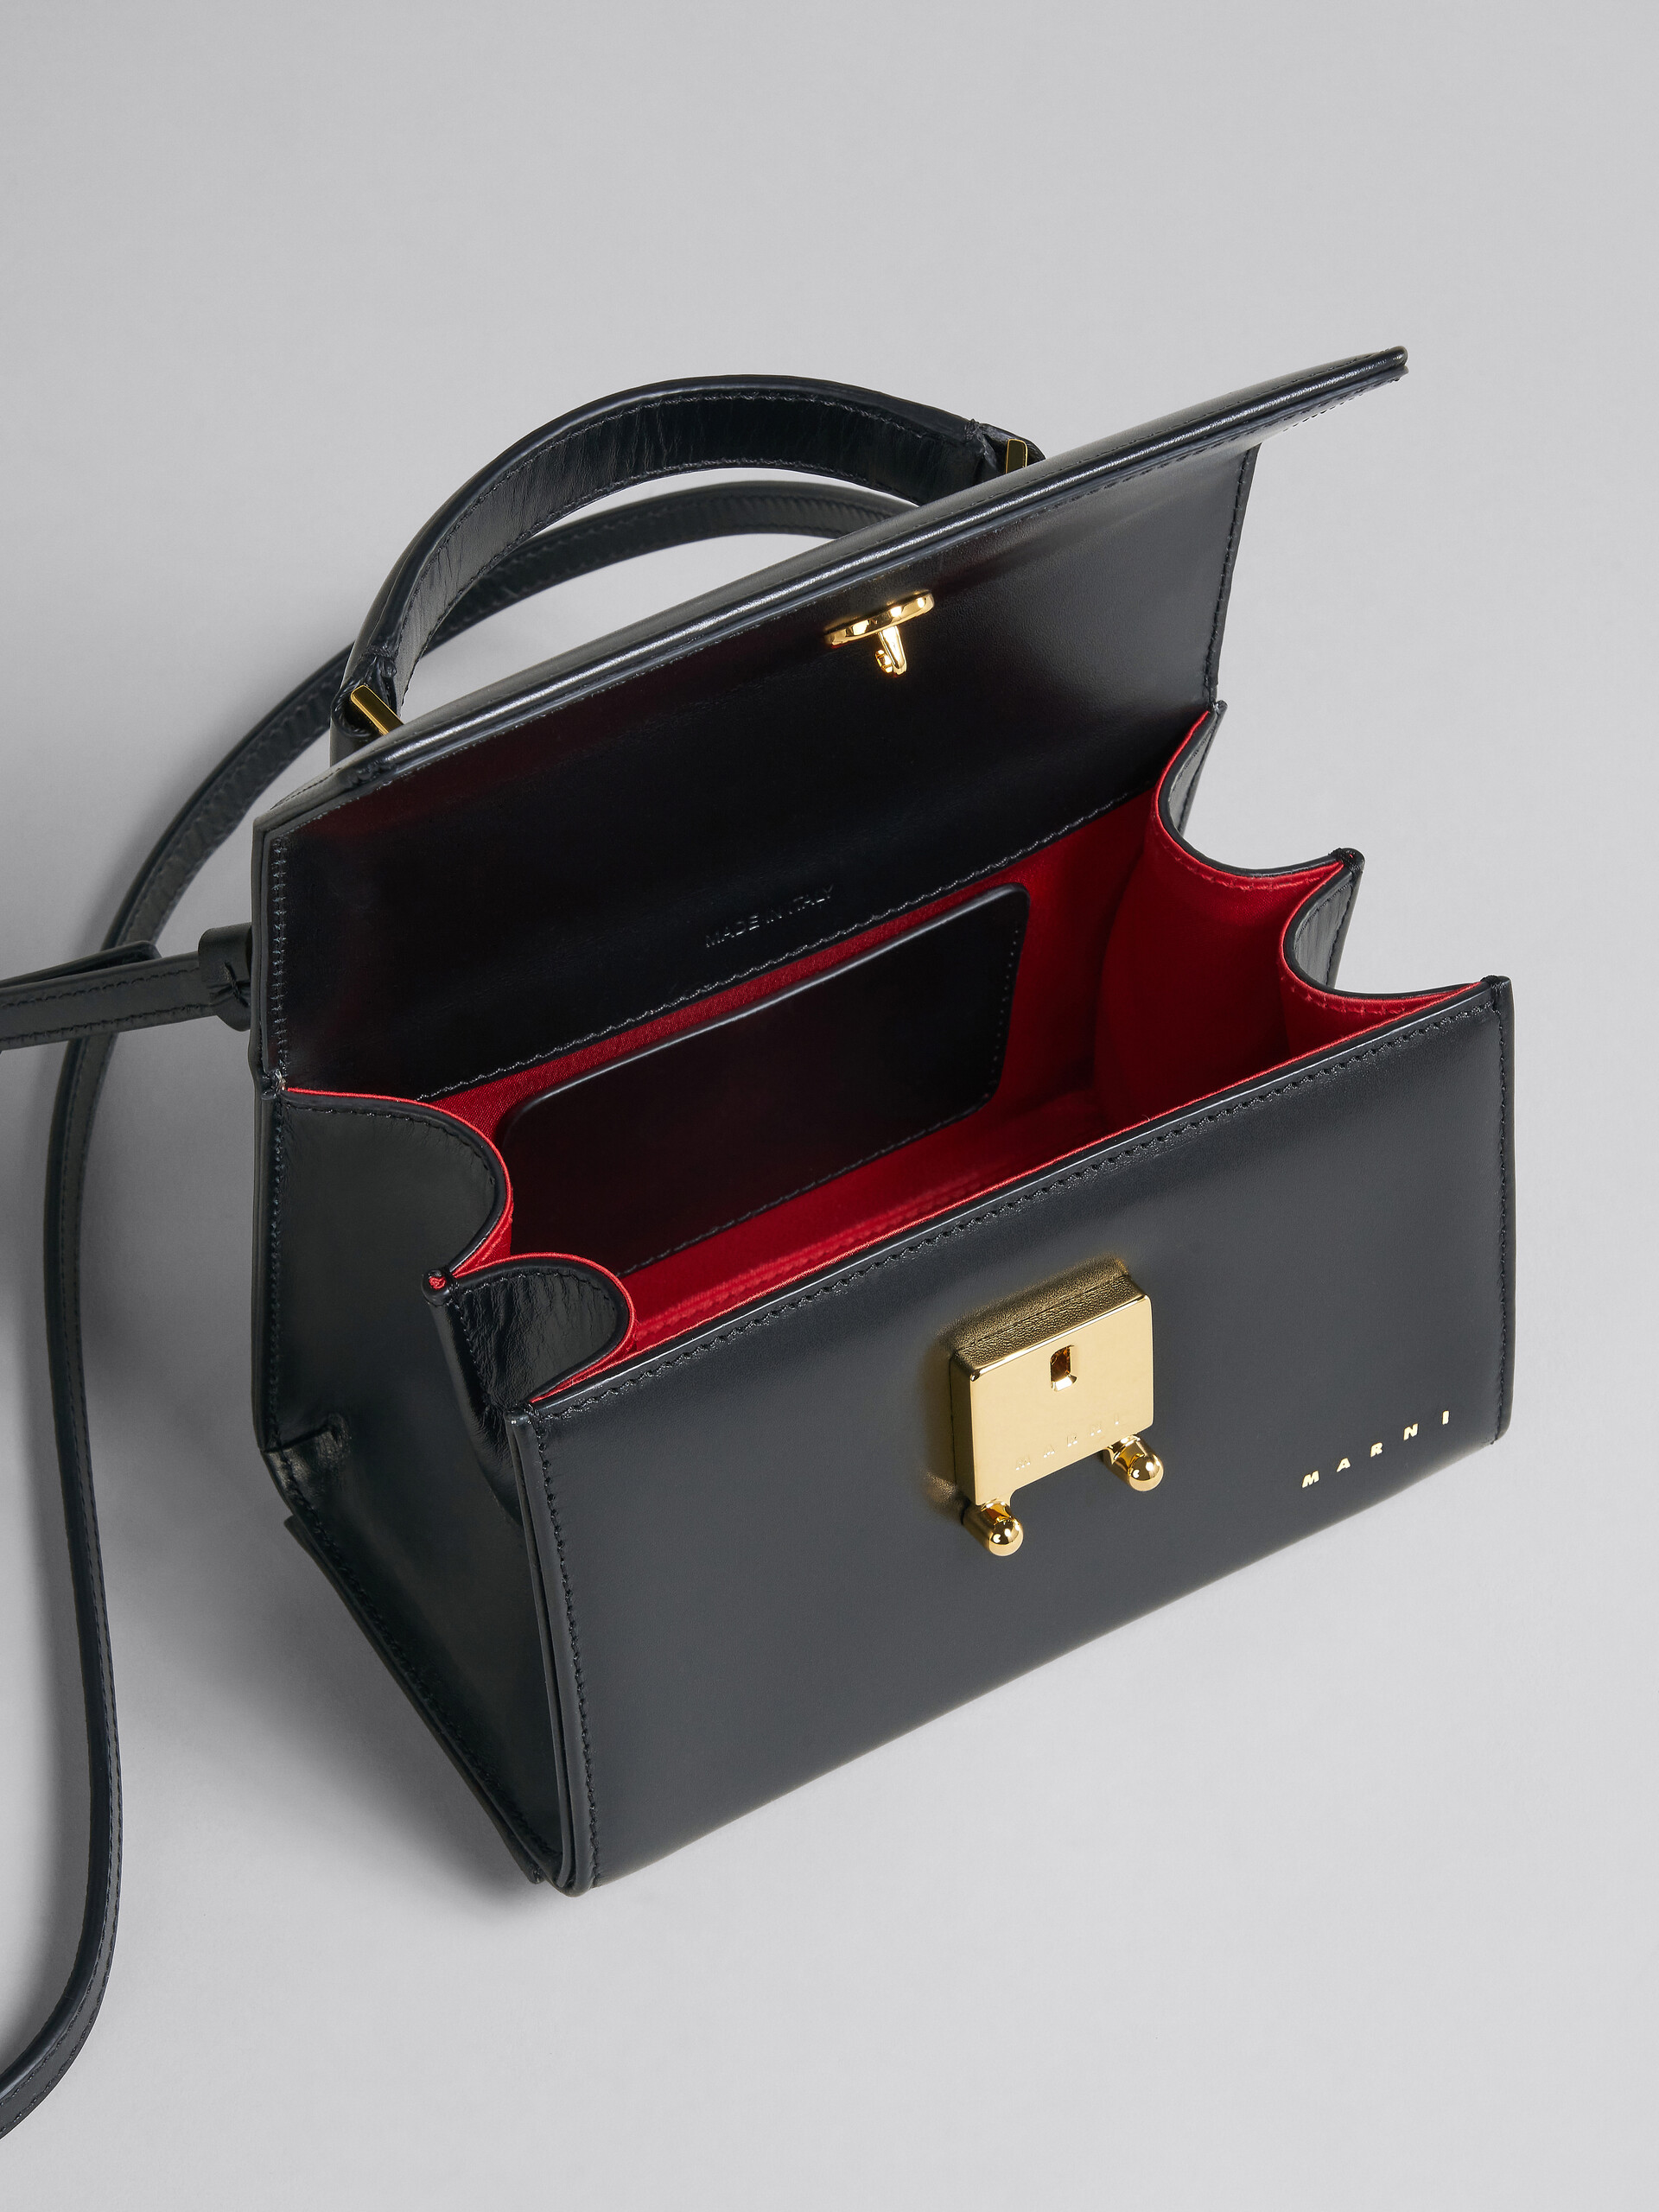 Relativity Mini Bag in black leather - Handbag - Image 4